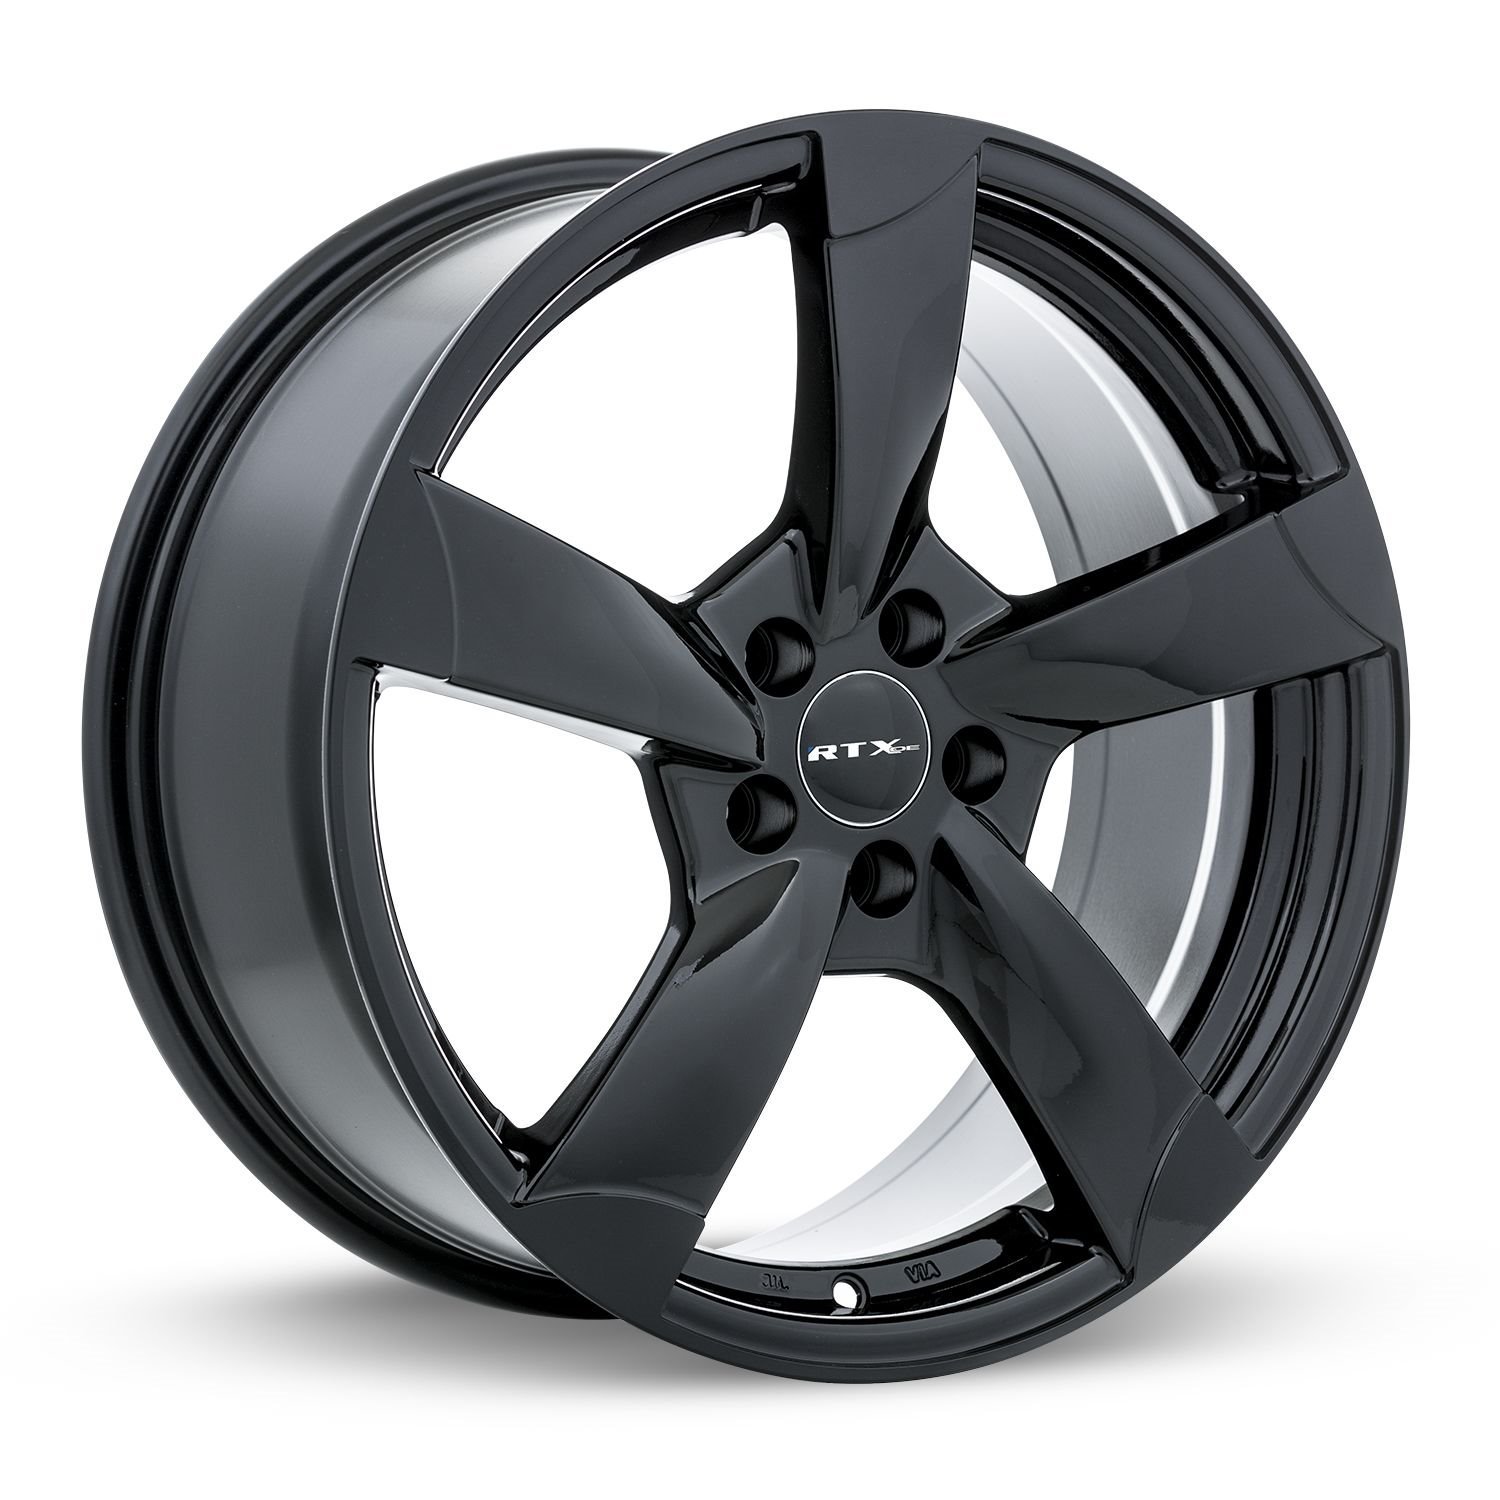 082160 OE-Series RS II Wheel [Size: 19" x 8.50"] Gloss Black Finish